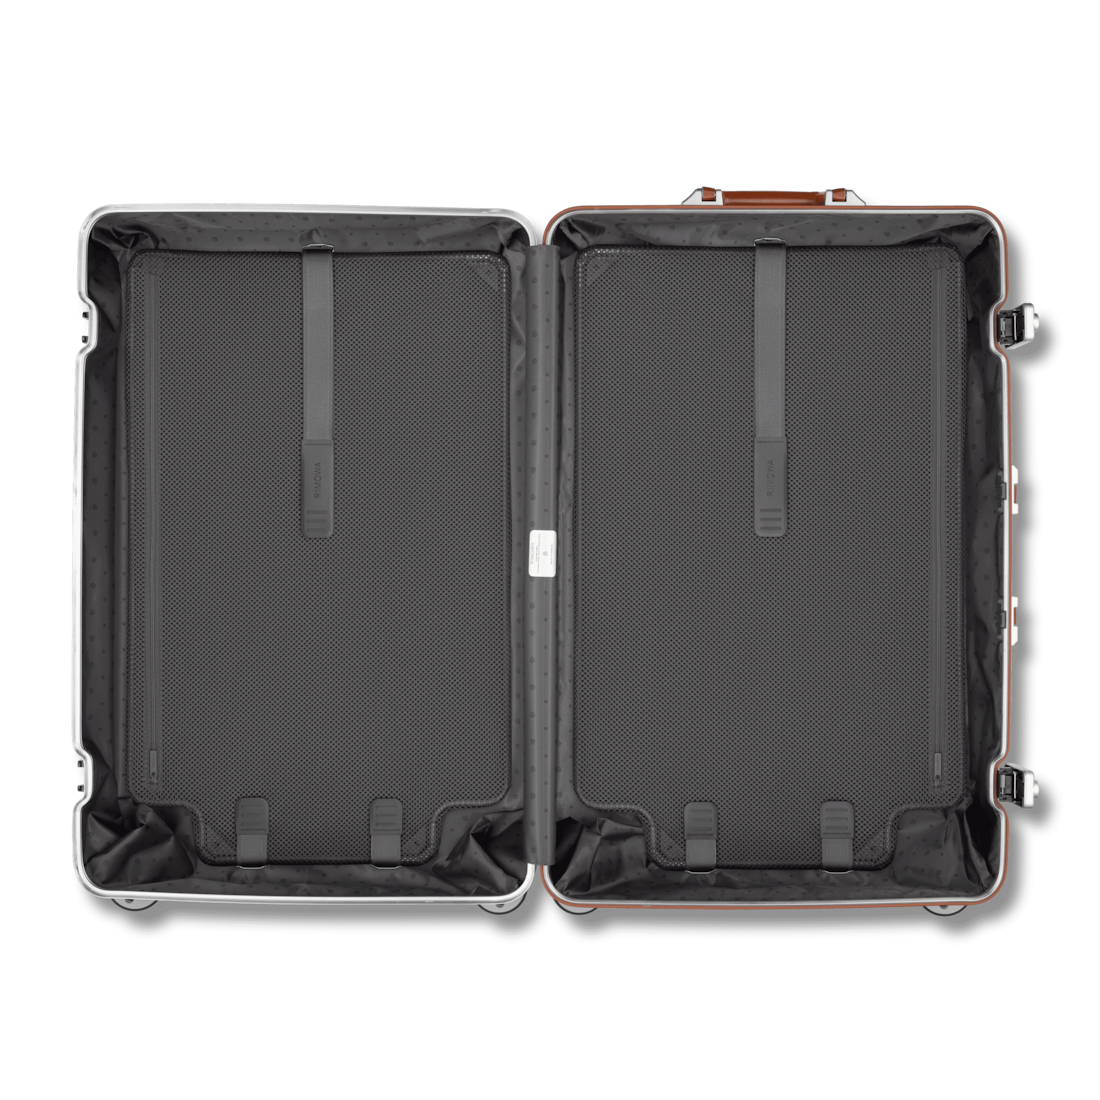 Original Check-In L Twist Suitcase in Silver & Brown | RIMOWA